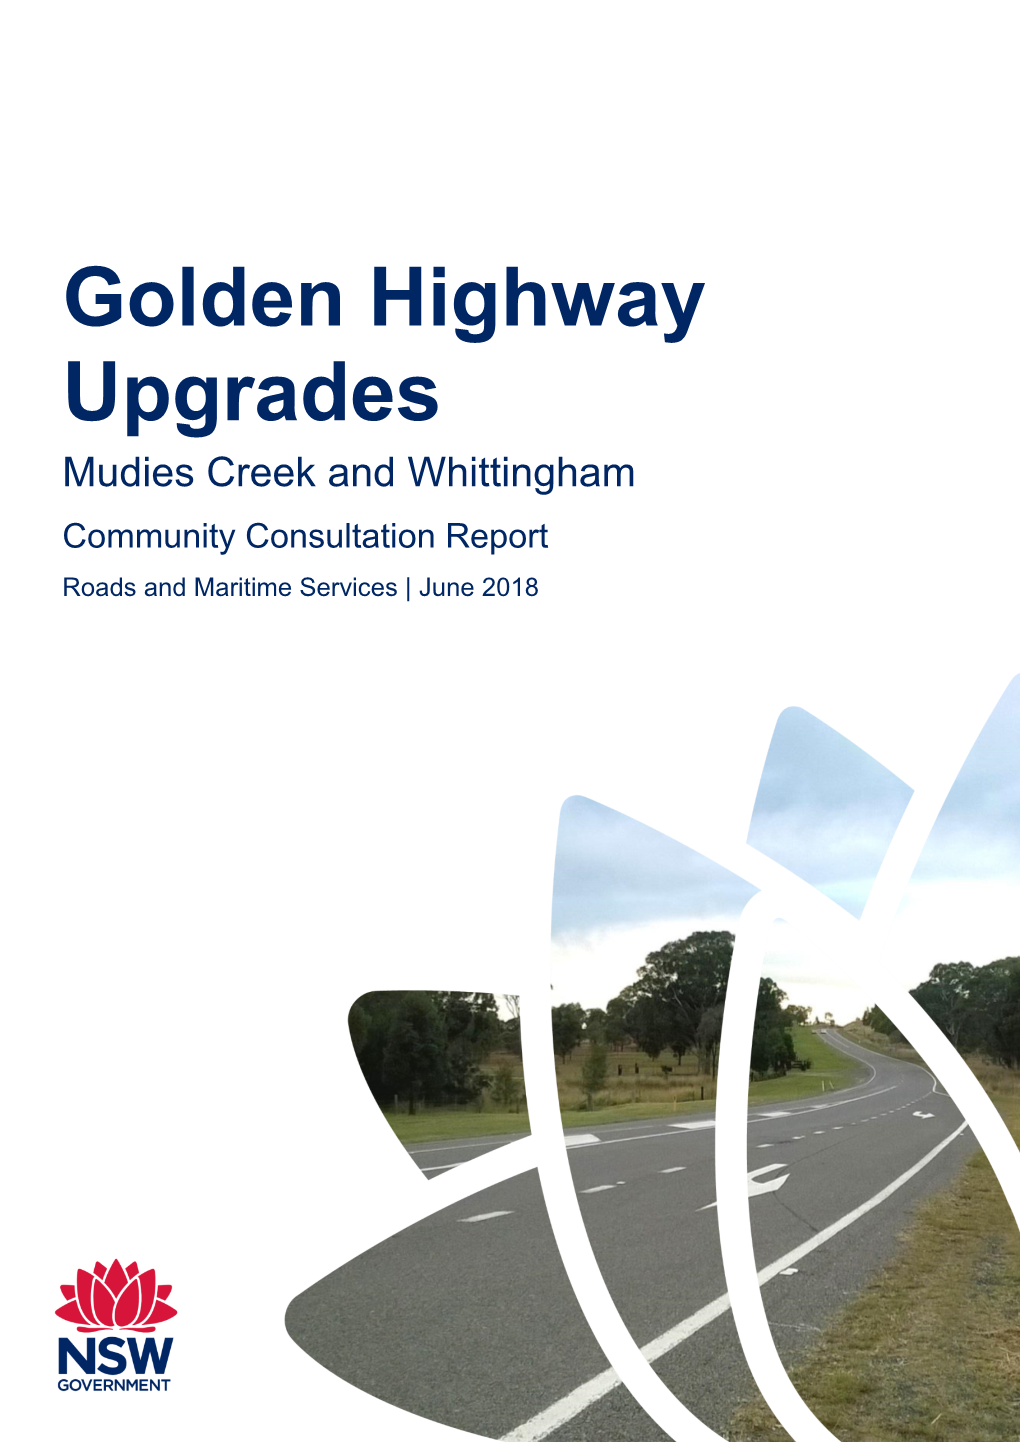 Golden Highway Mudies Creek and Whittingham Community